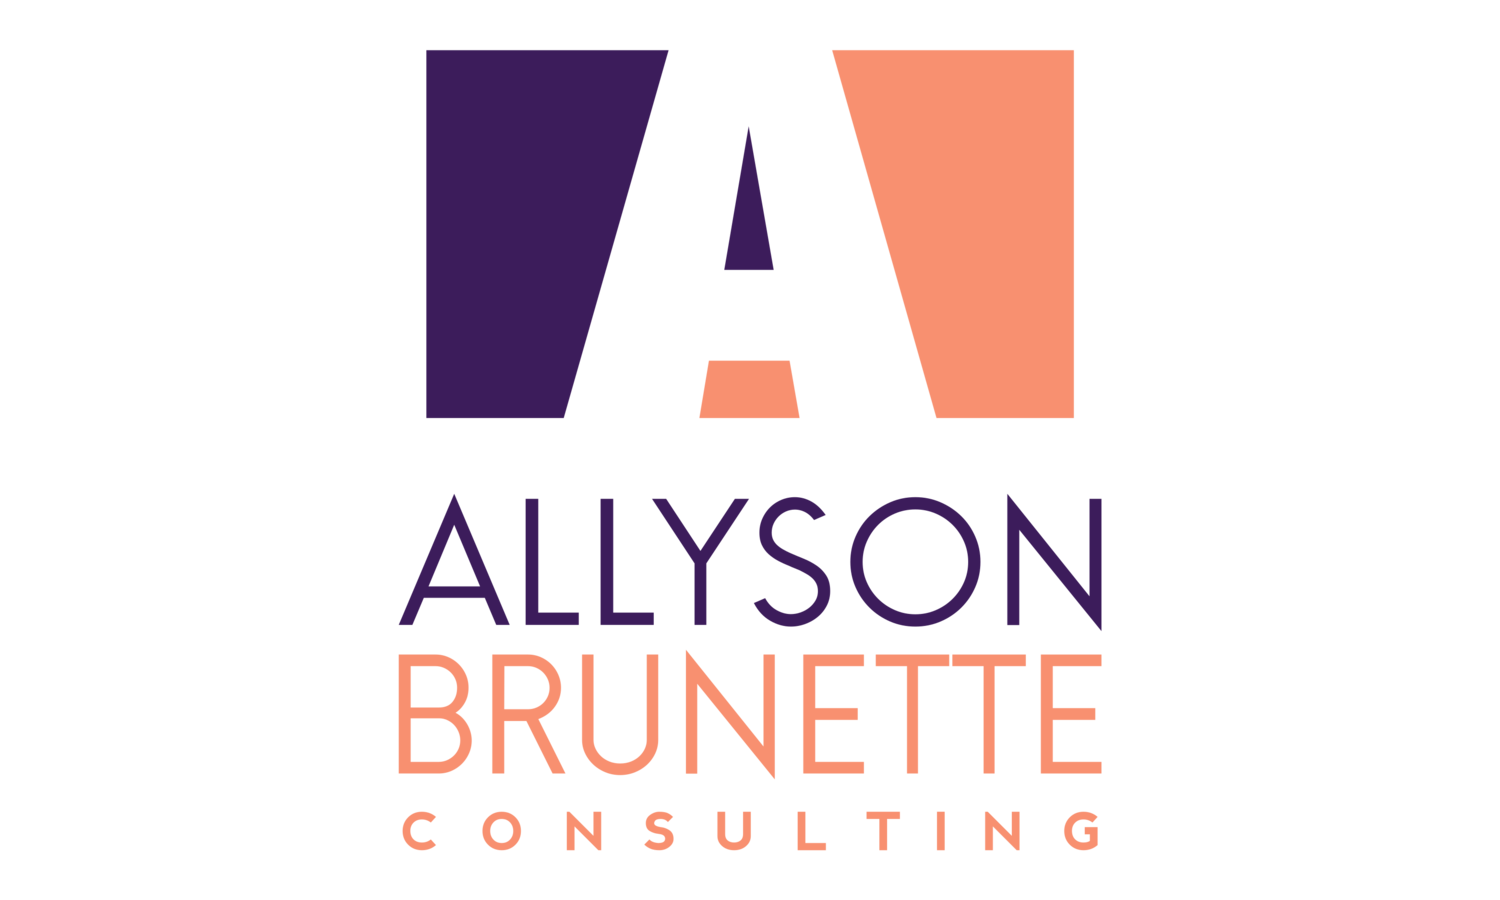 Allyson Brunette Consulting